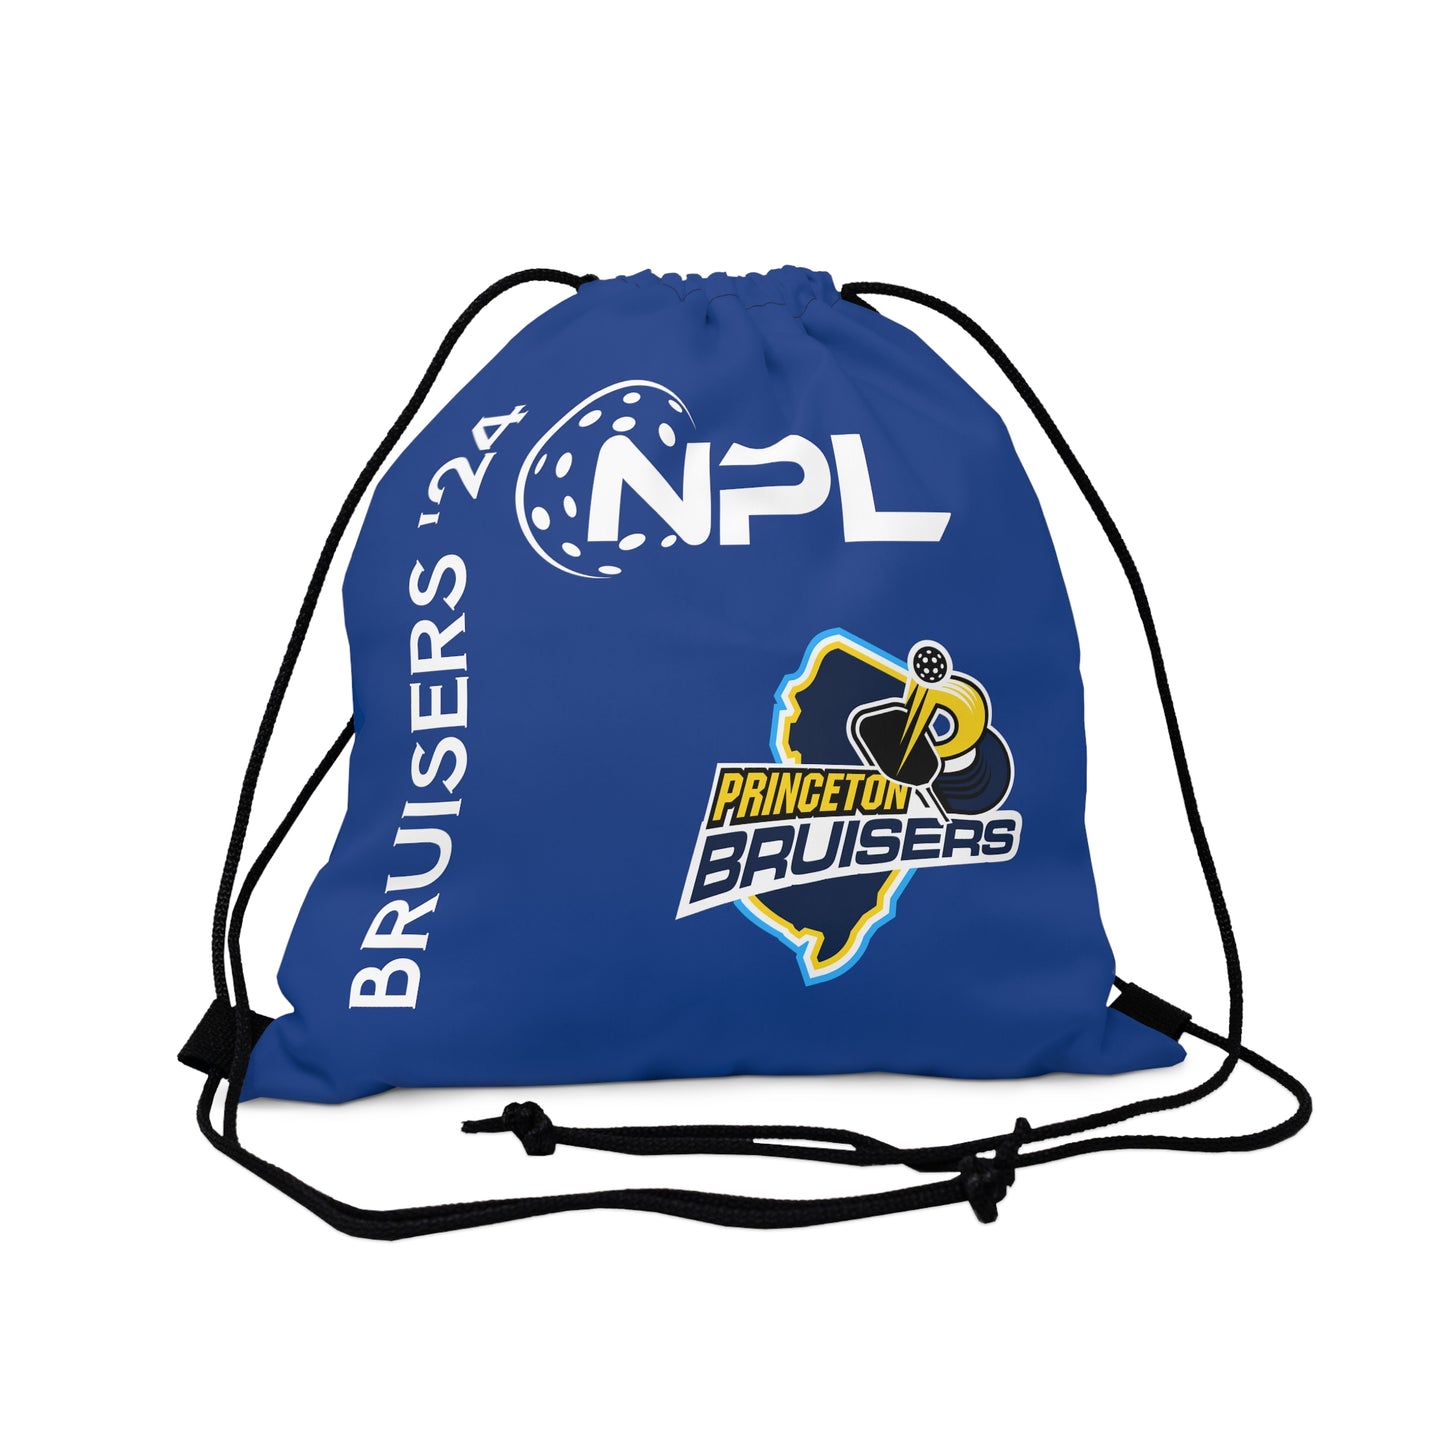 Princeton Bruisers Outdoor NPL Team - Sports Bag